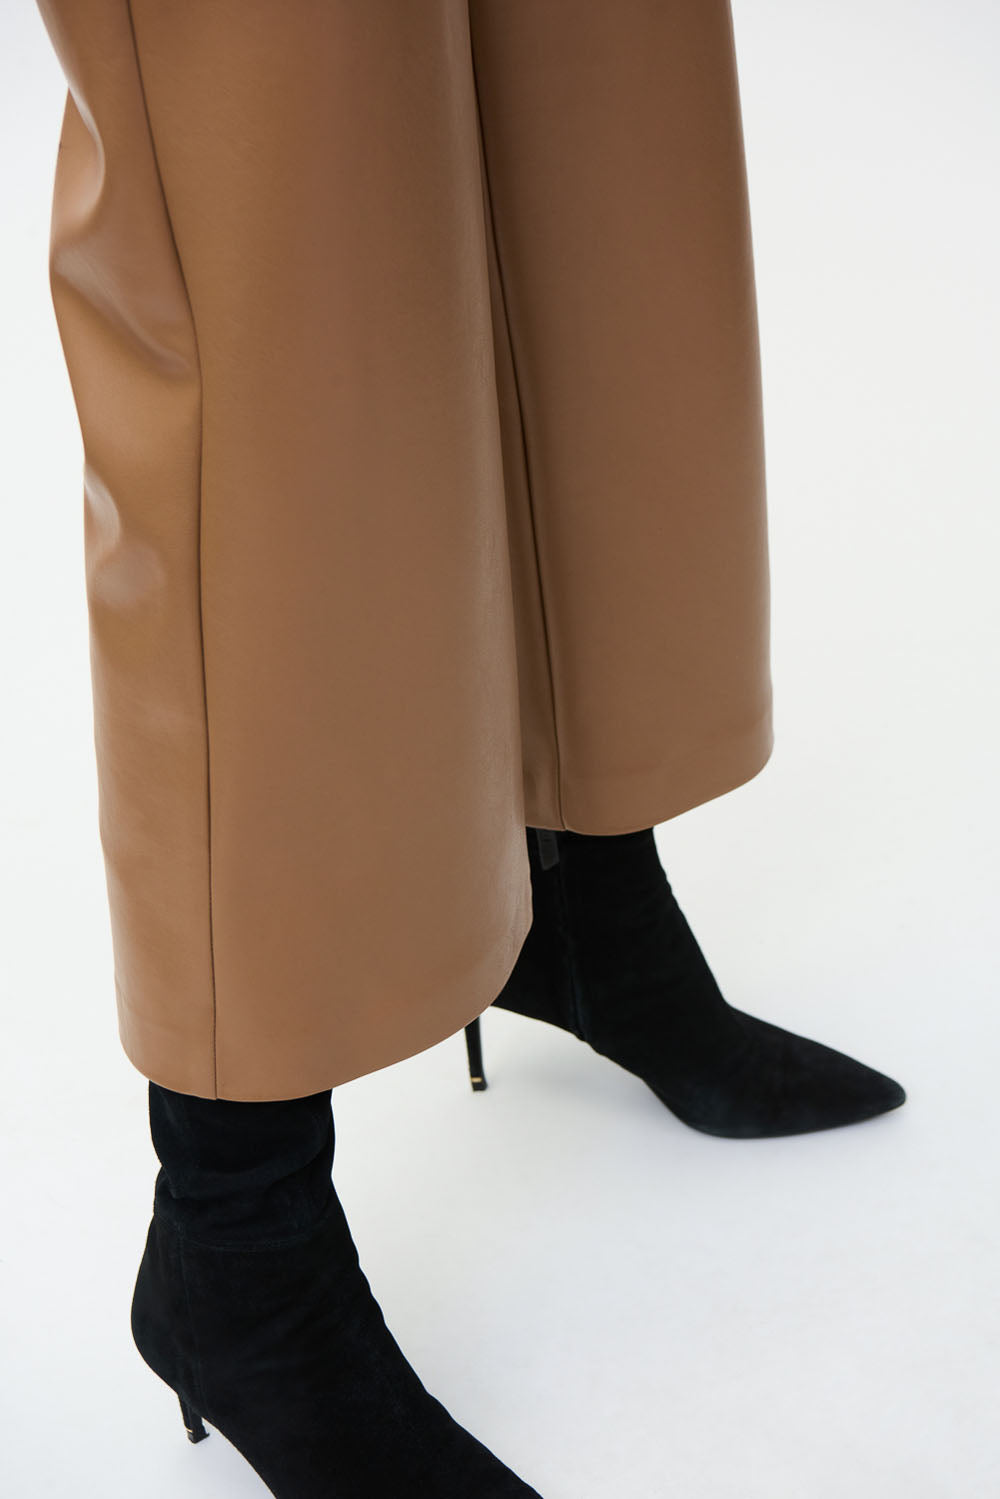 Joseph Ribkoff Nutmeg Faux Leather Flared 3-4 Length Pants Style 224016